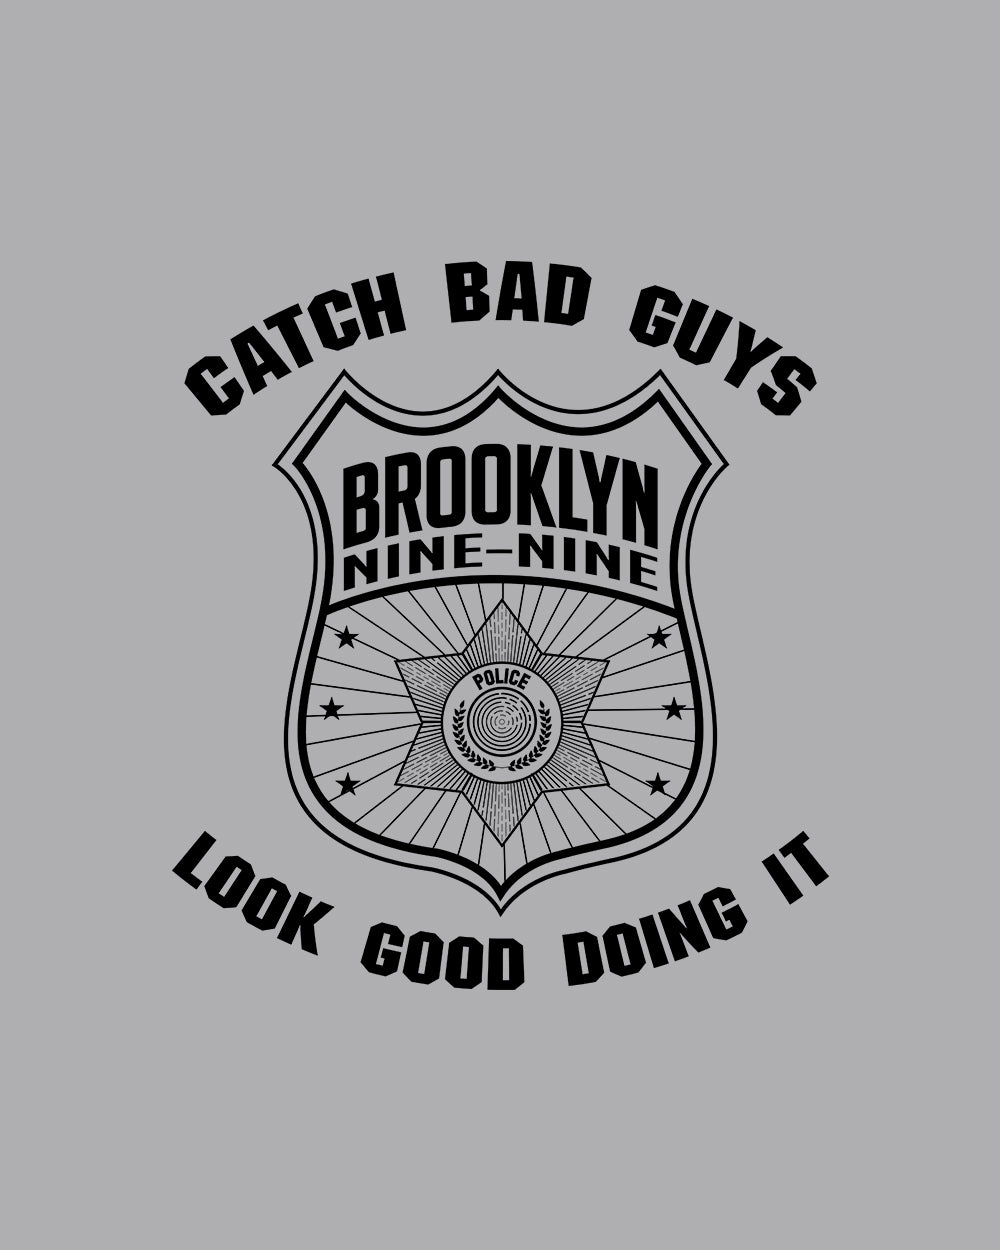 Brooklyn Nine-Nine Catch Bad Guys Long Sleeve Australia Online #colour_grey